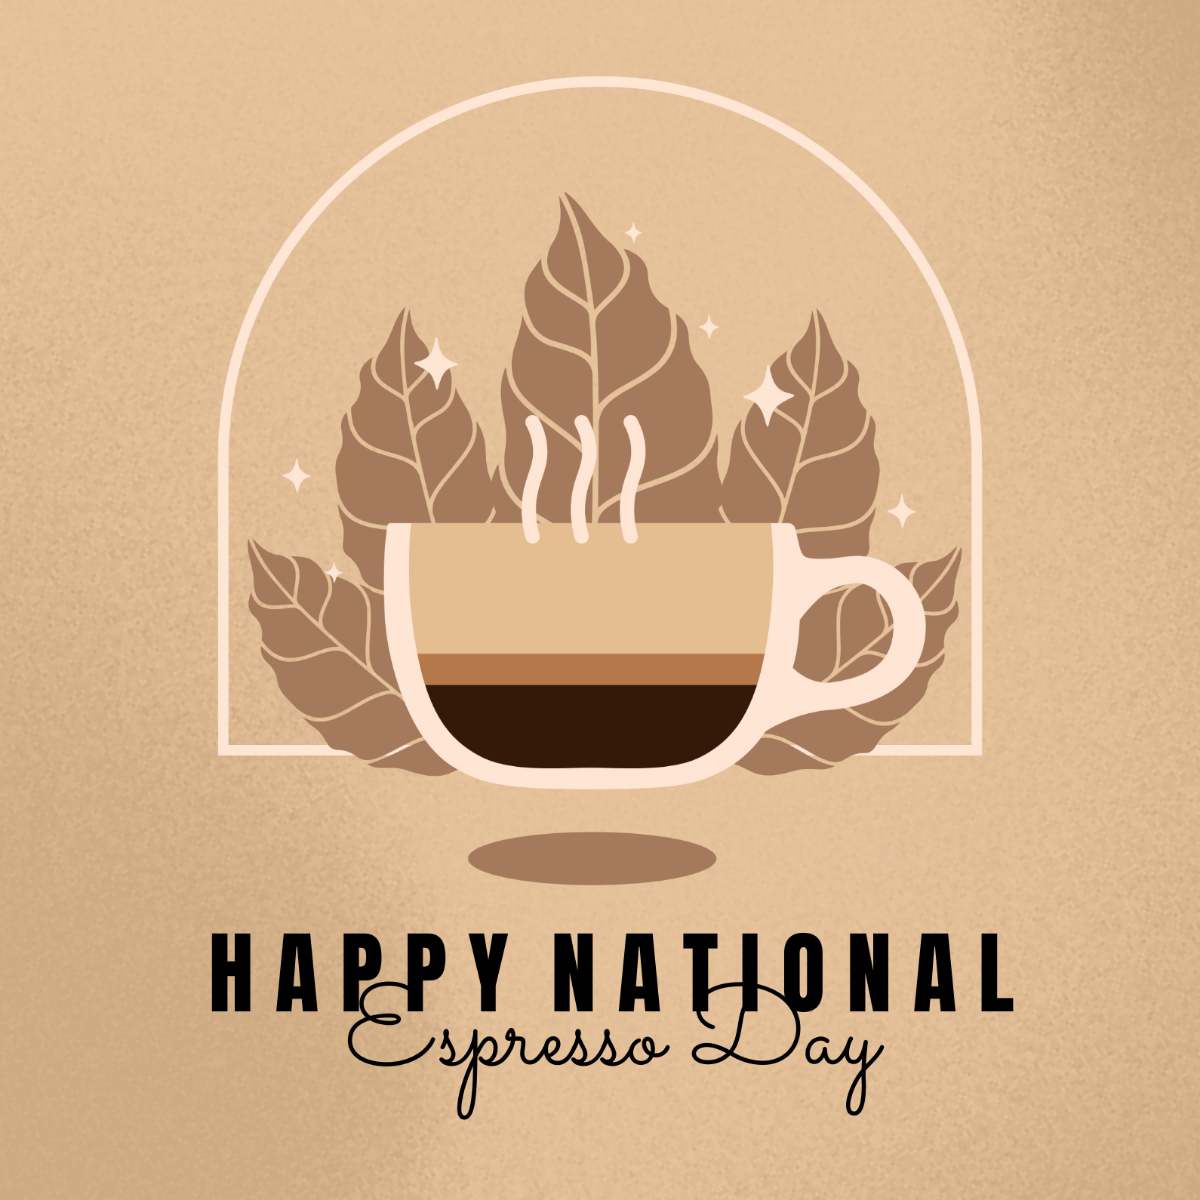 National Espresso Day LinkedIn Post